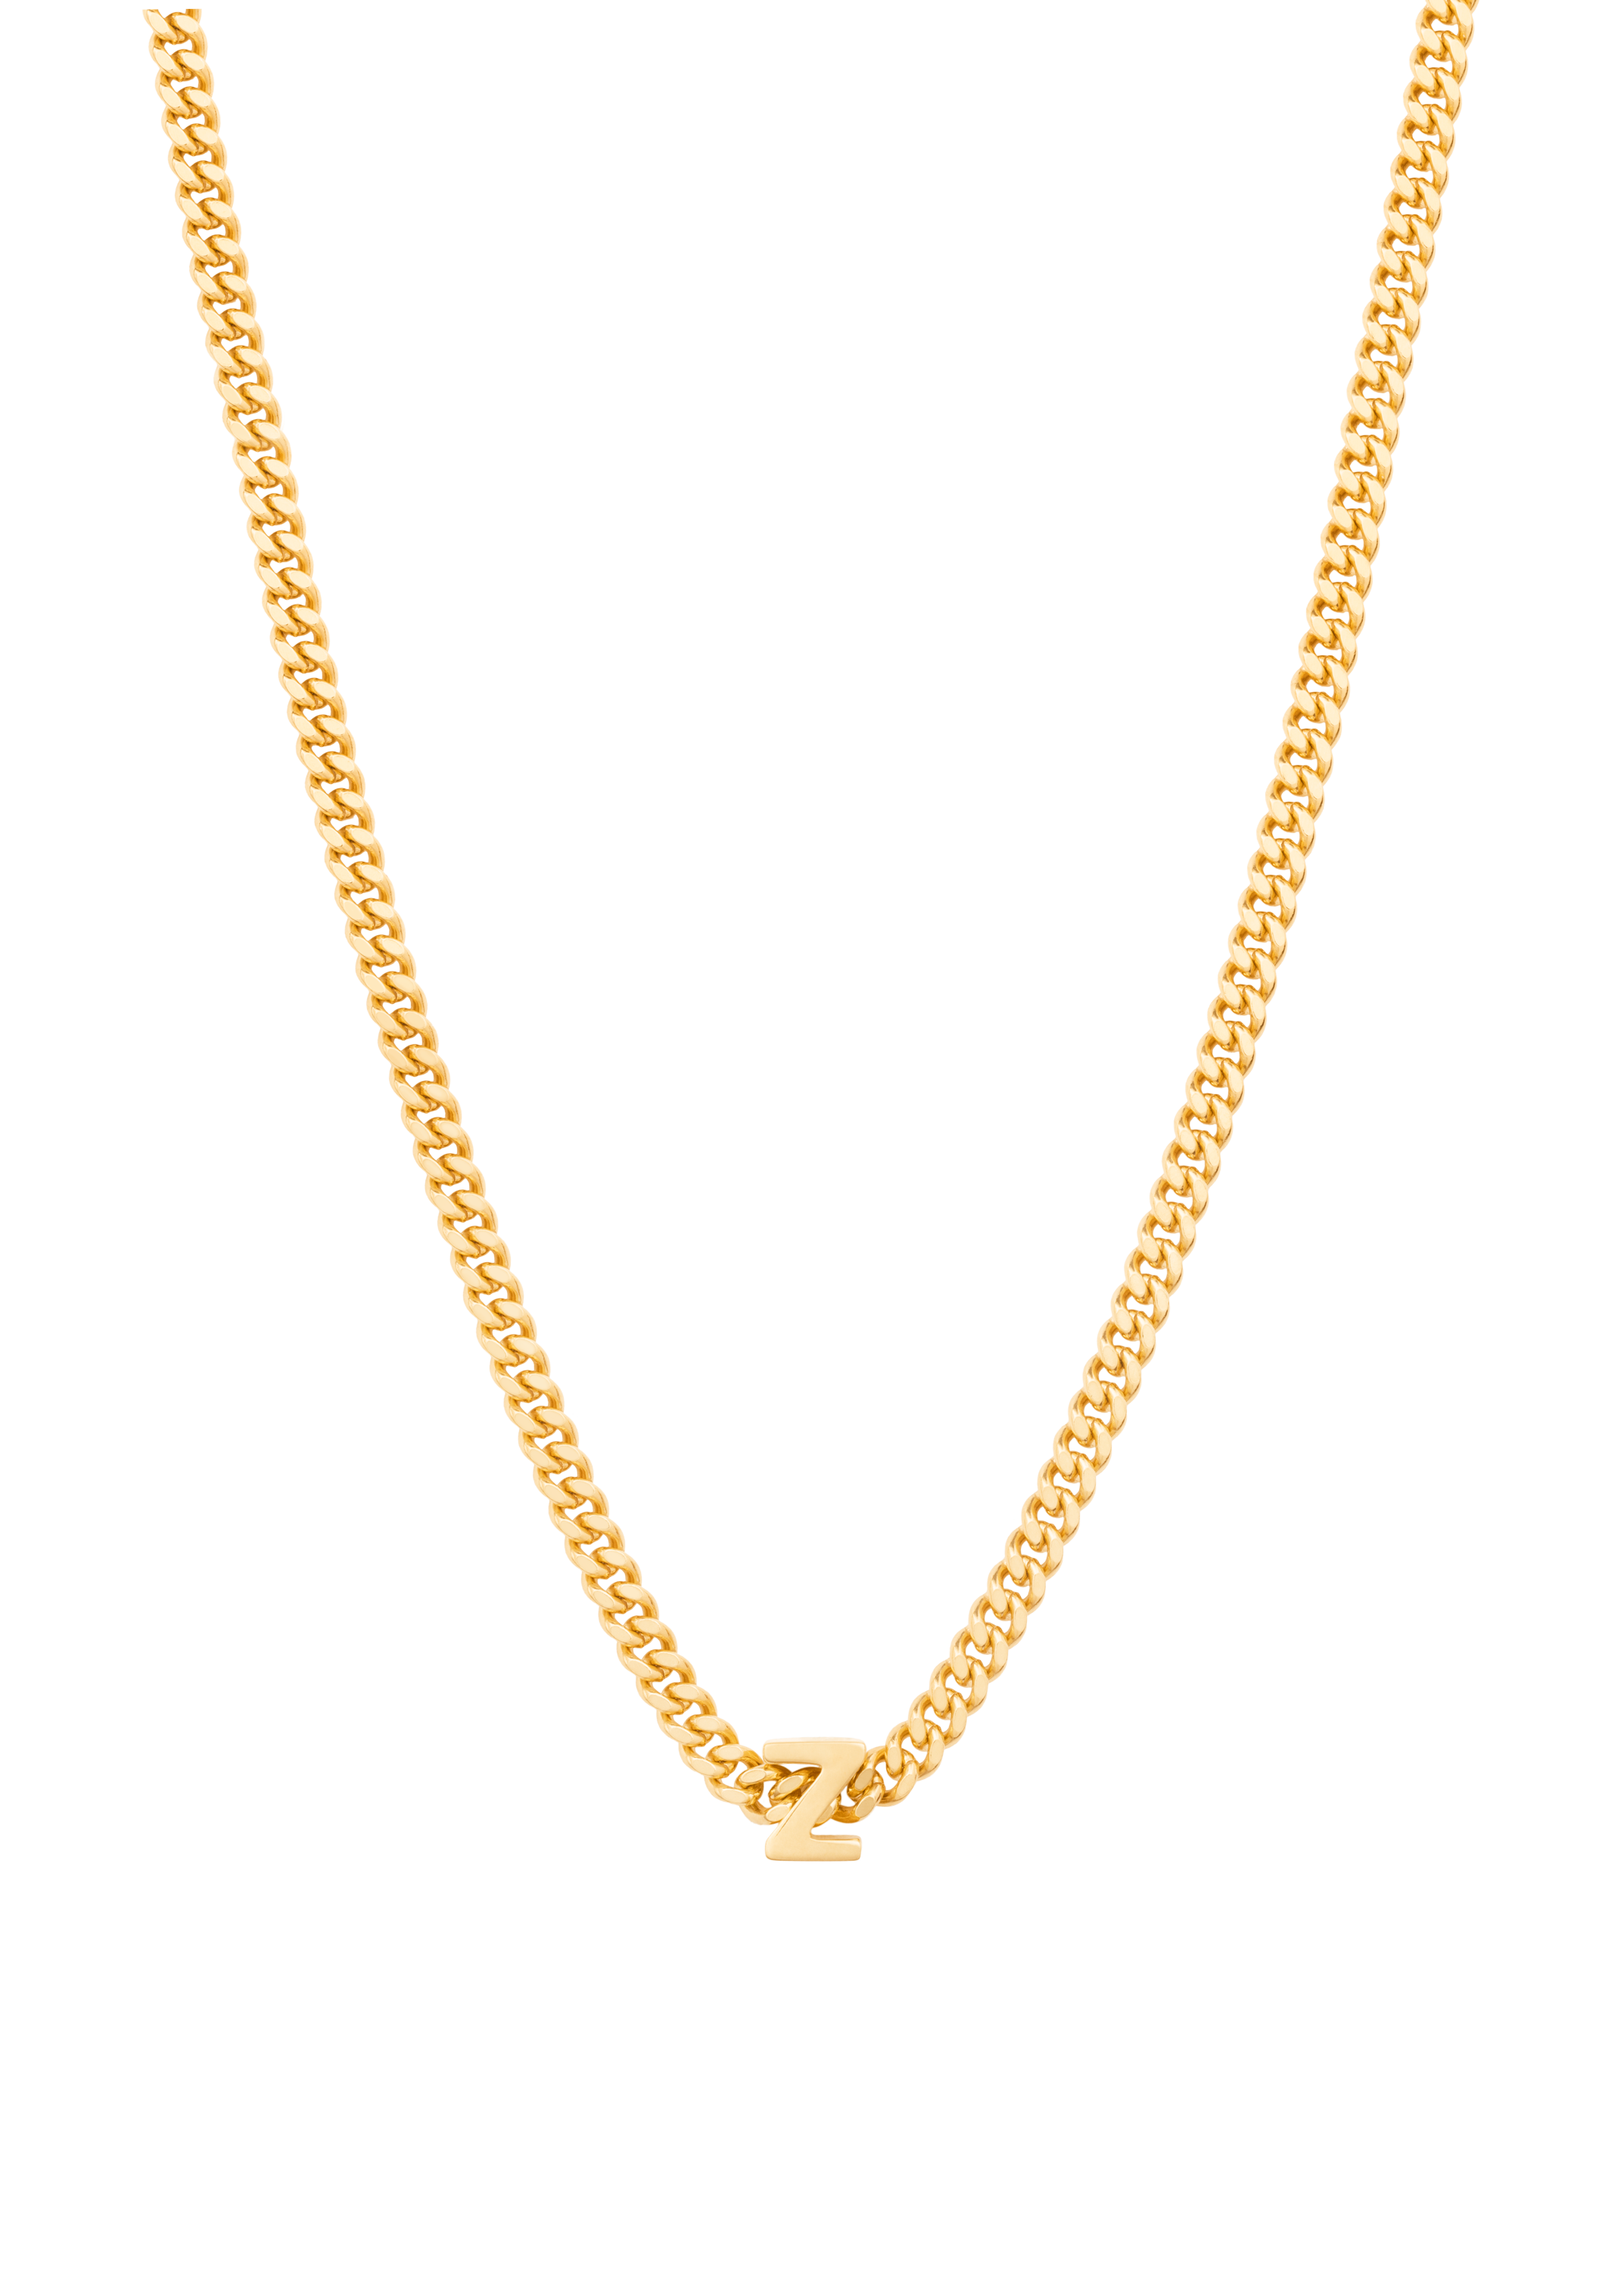 alphabet necklace with pendant Z